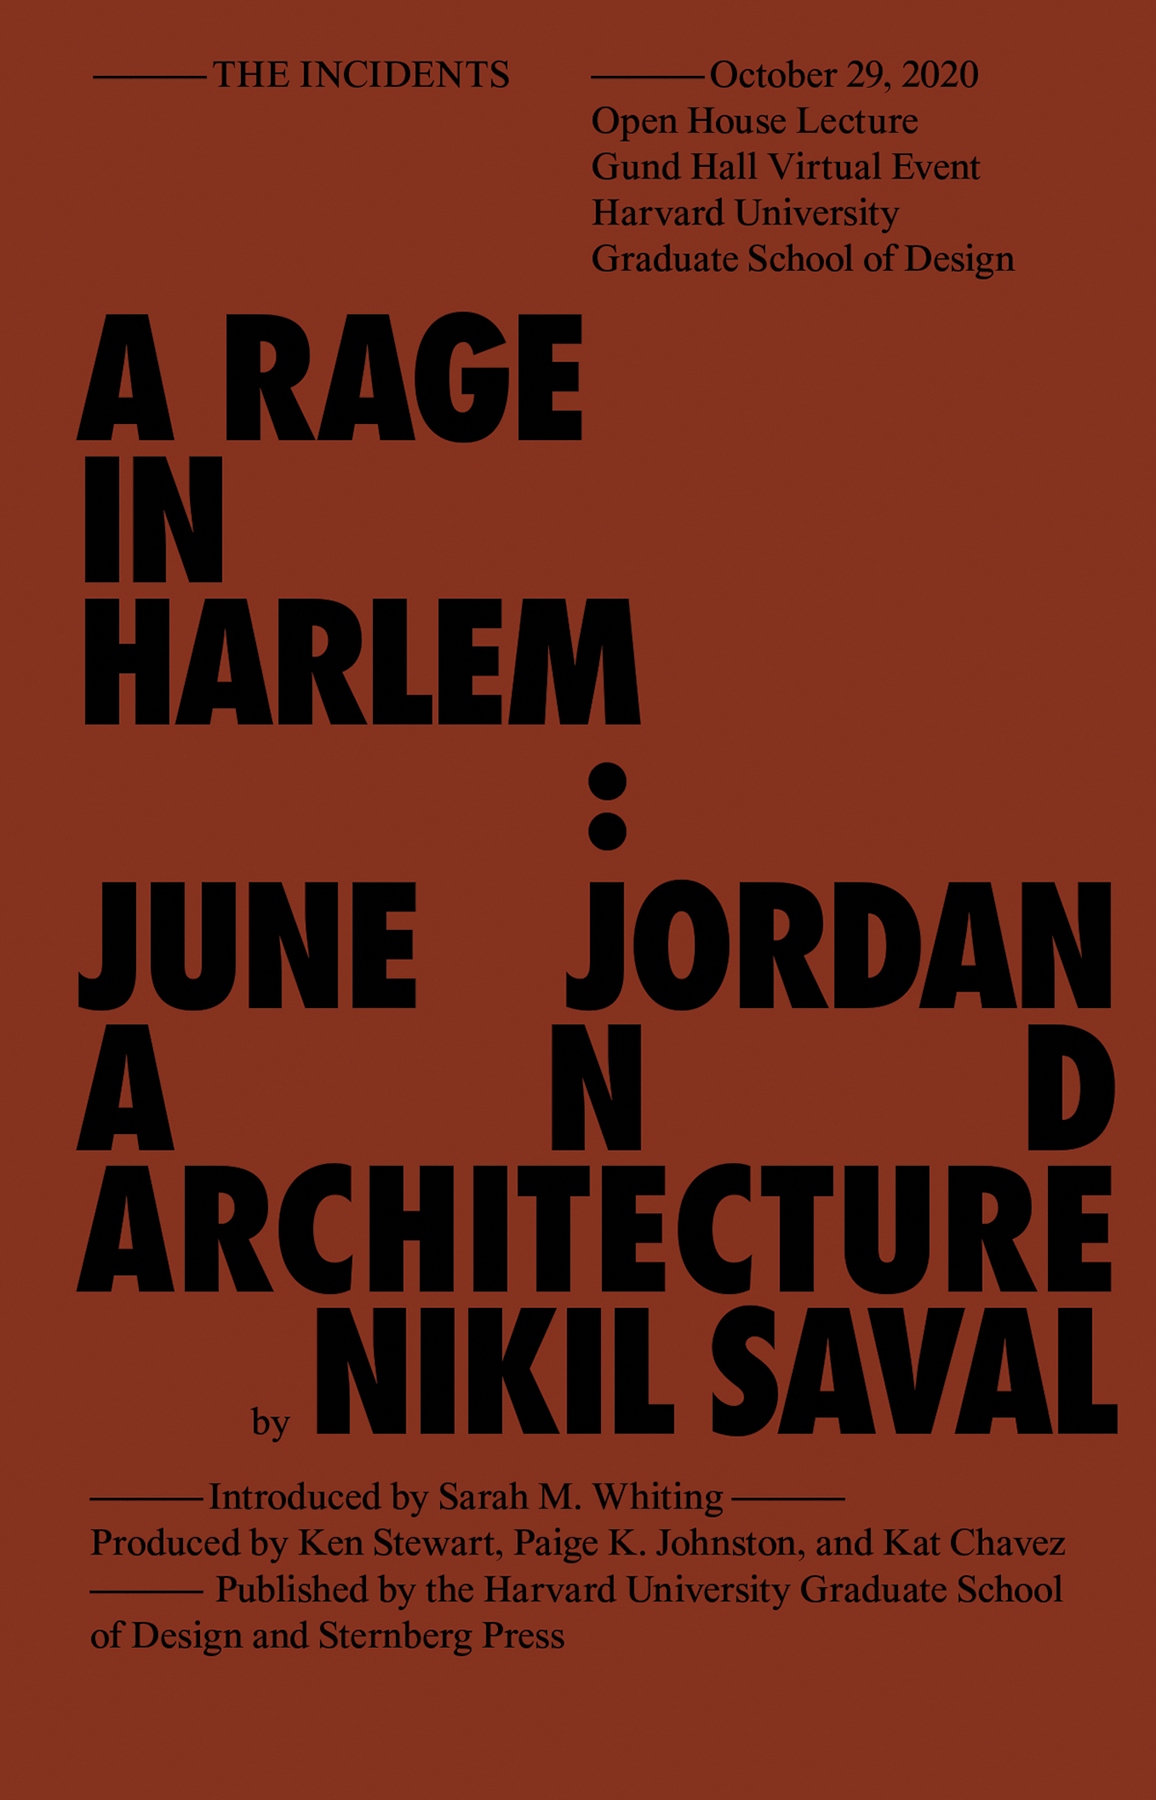 https://www.sternberg-press.com/wp-content/uploads/2013/06/A-Rage-in-Harlem-low-res.png